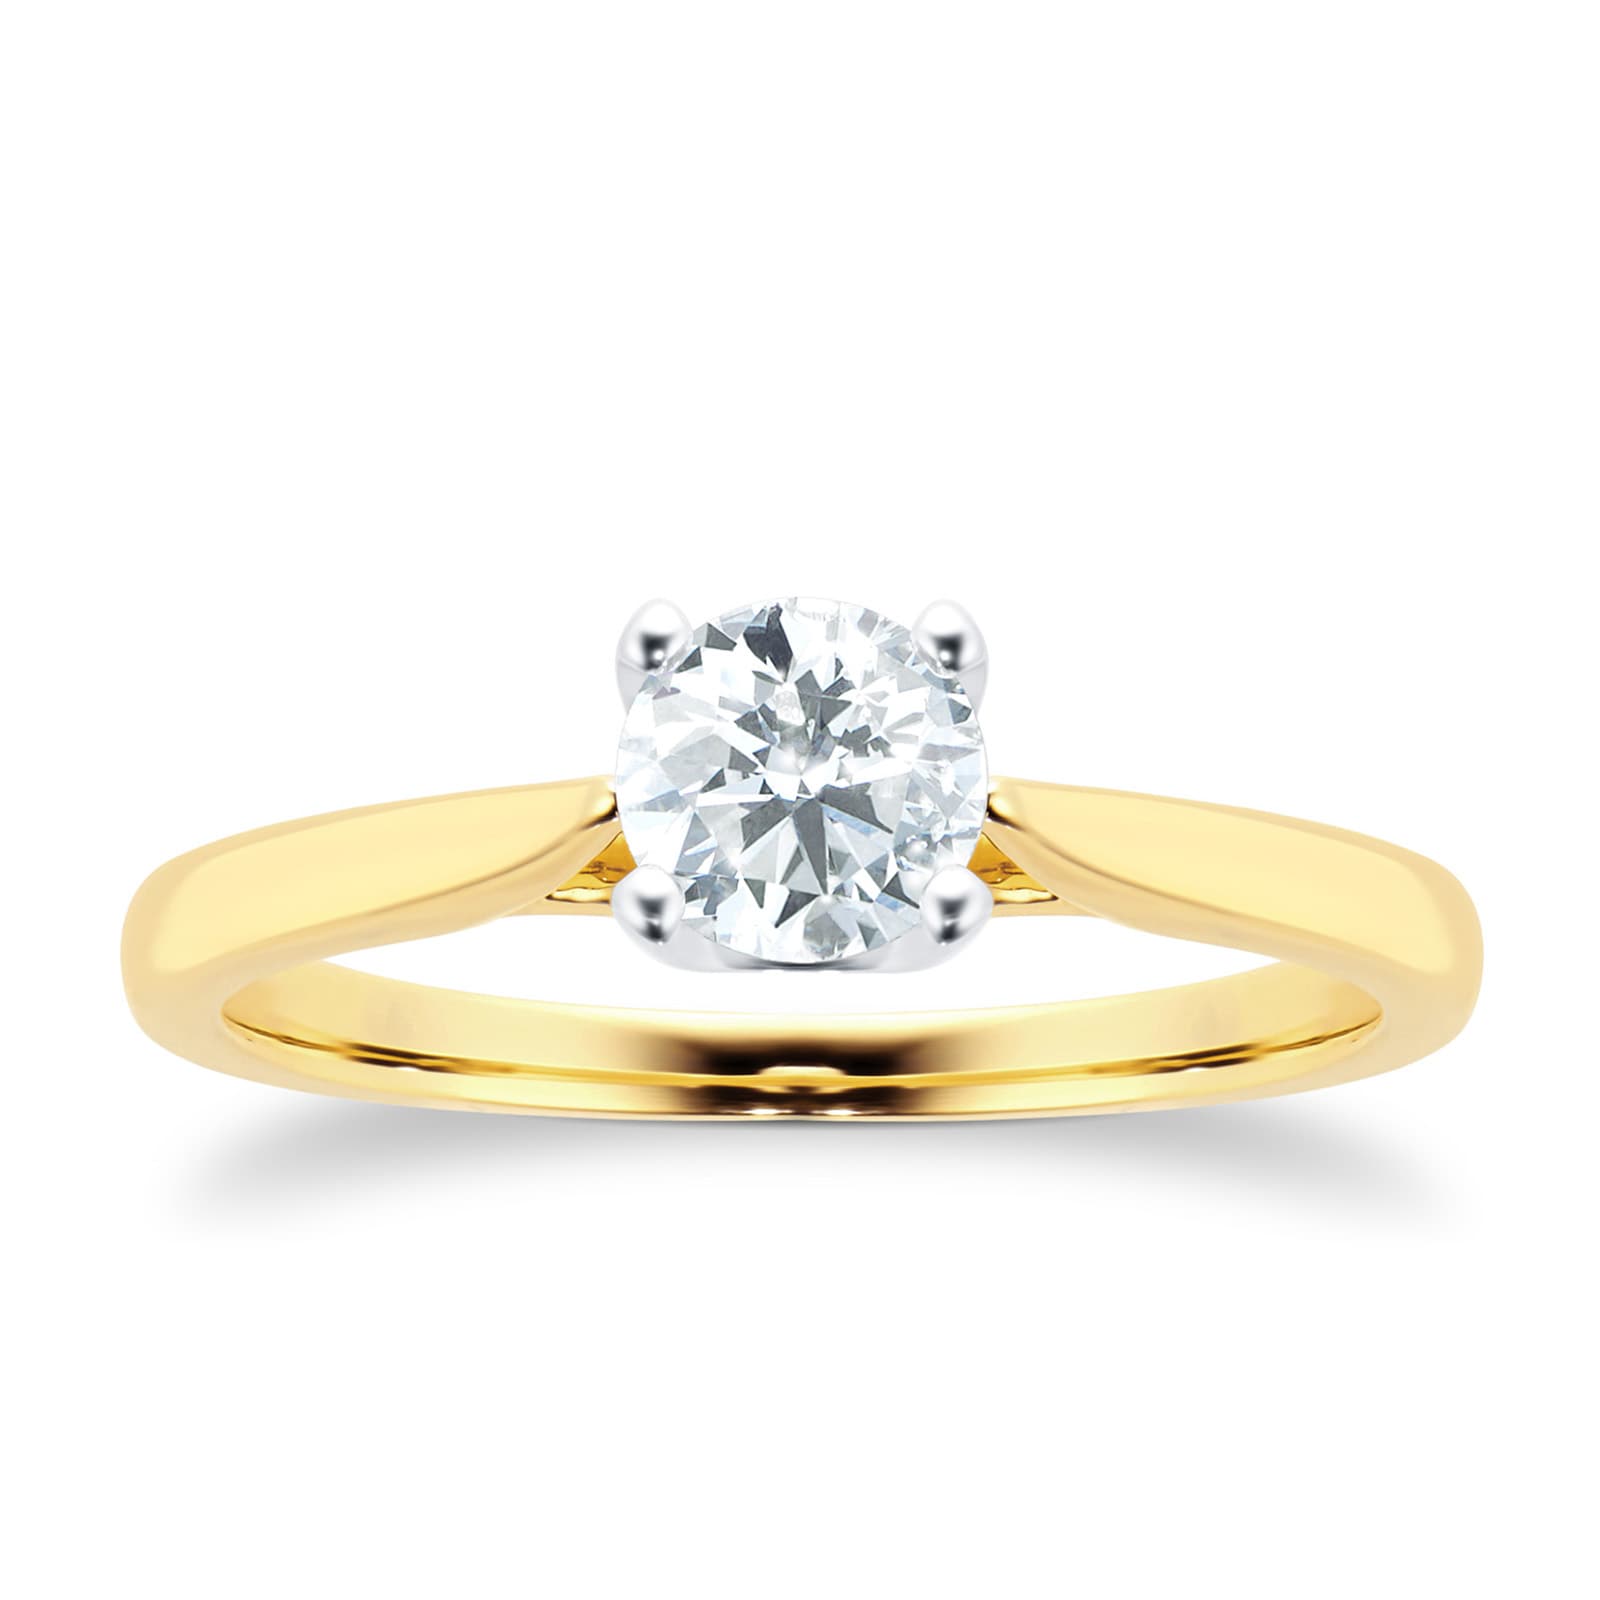 18ct Yellow Gold Brilliant Cut 0.50 Carat 88 Facet Diamond Ring - Ring Size N